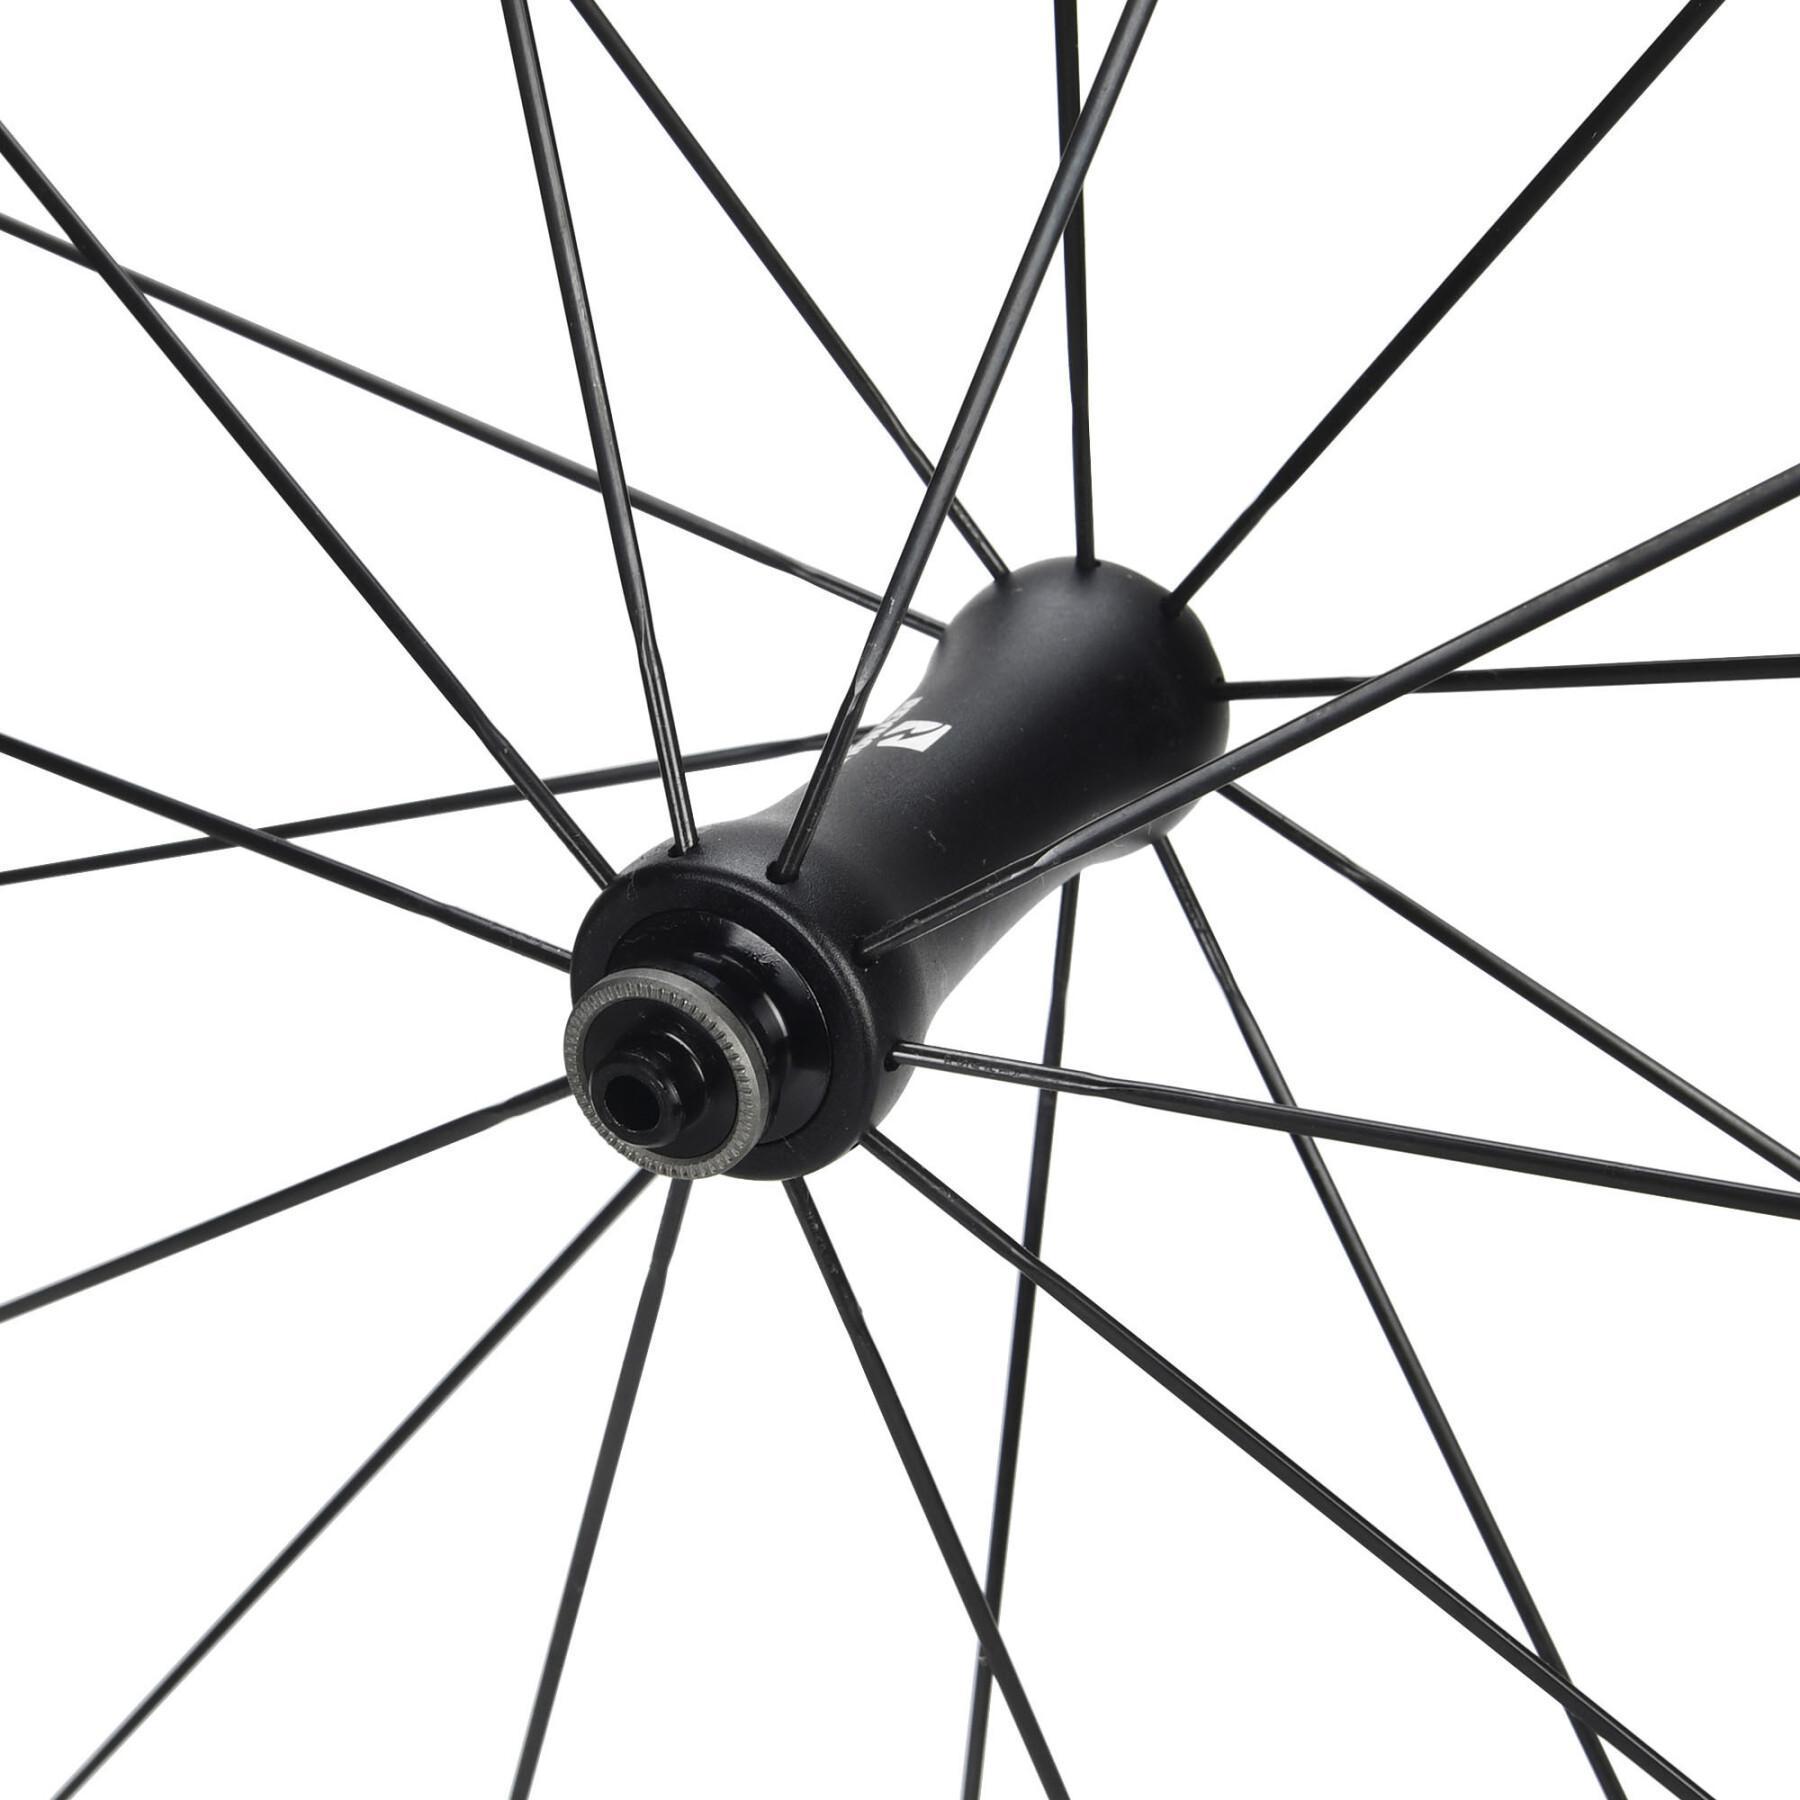 Pair of tubeless bicycle wheel pads Reynolds AR80X Shimano